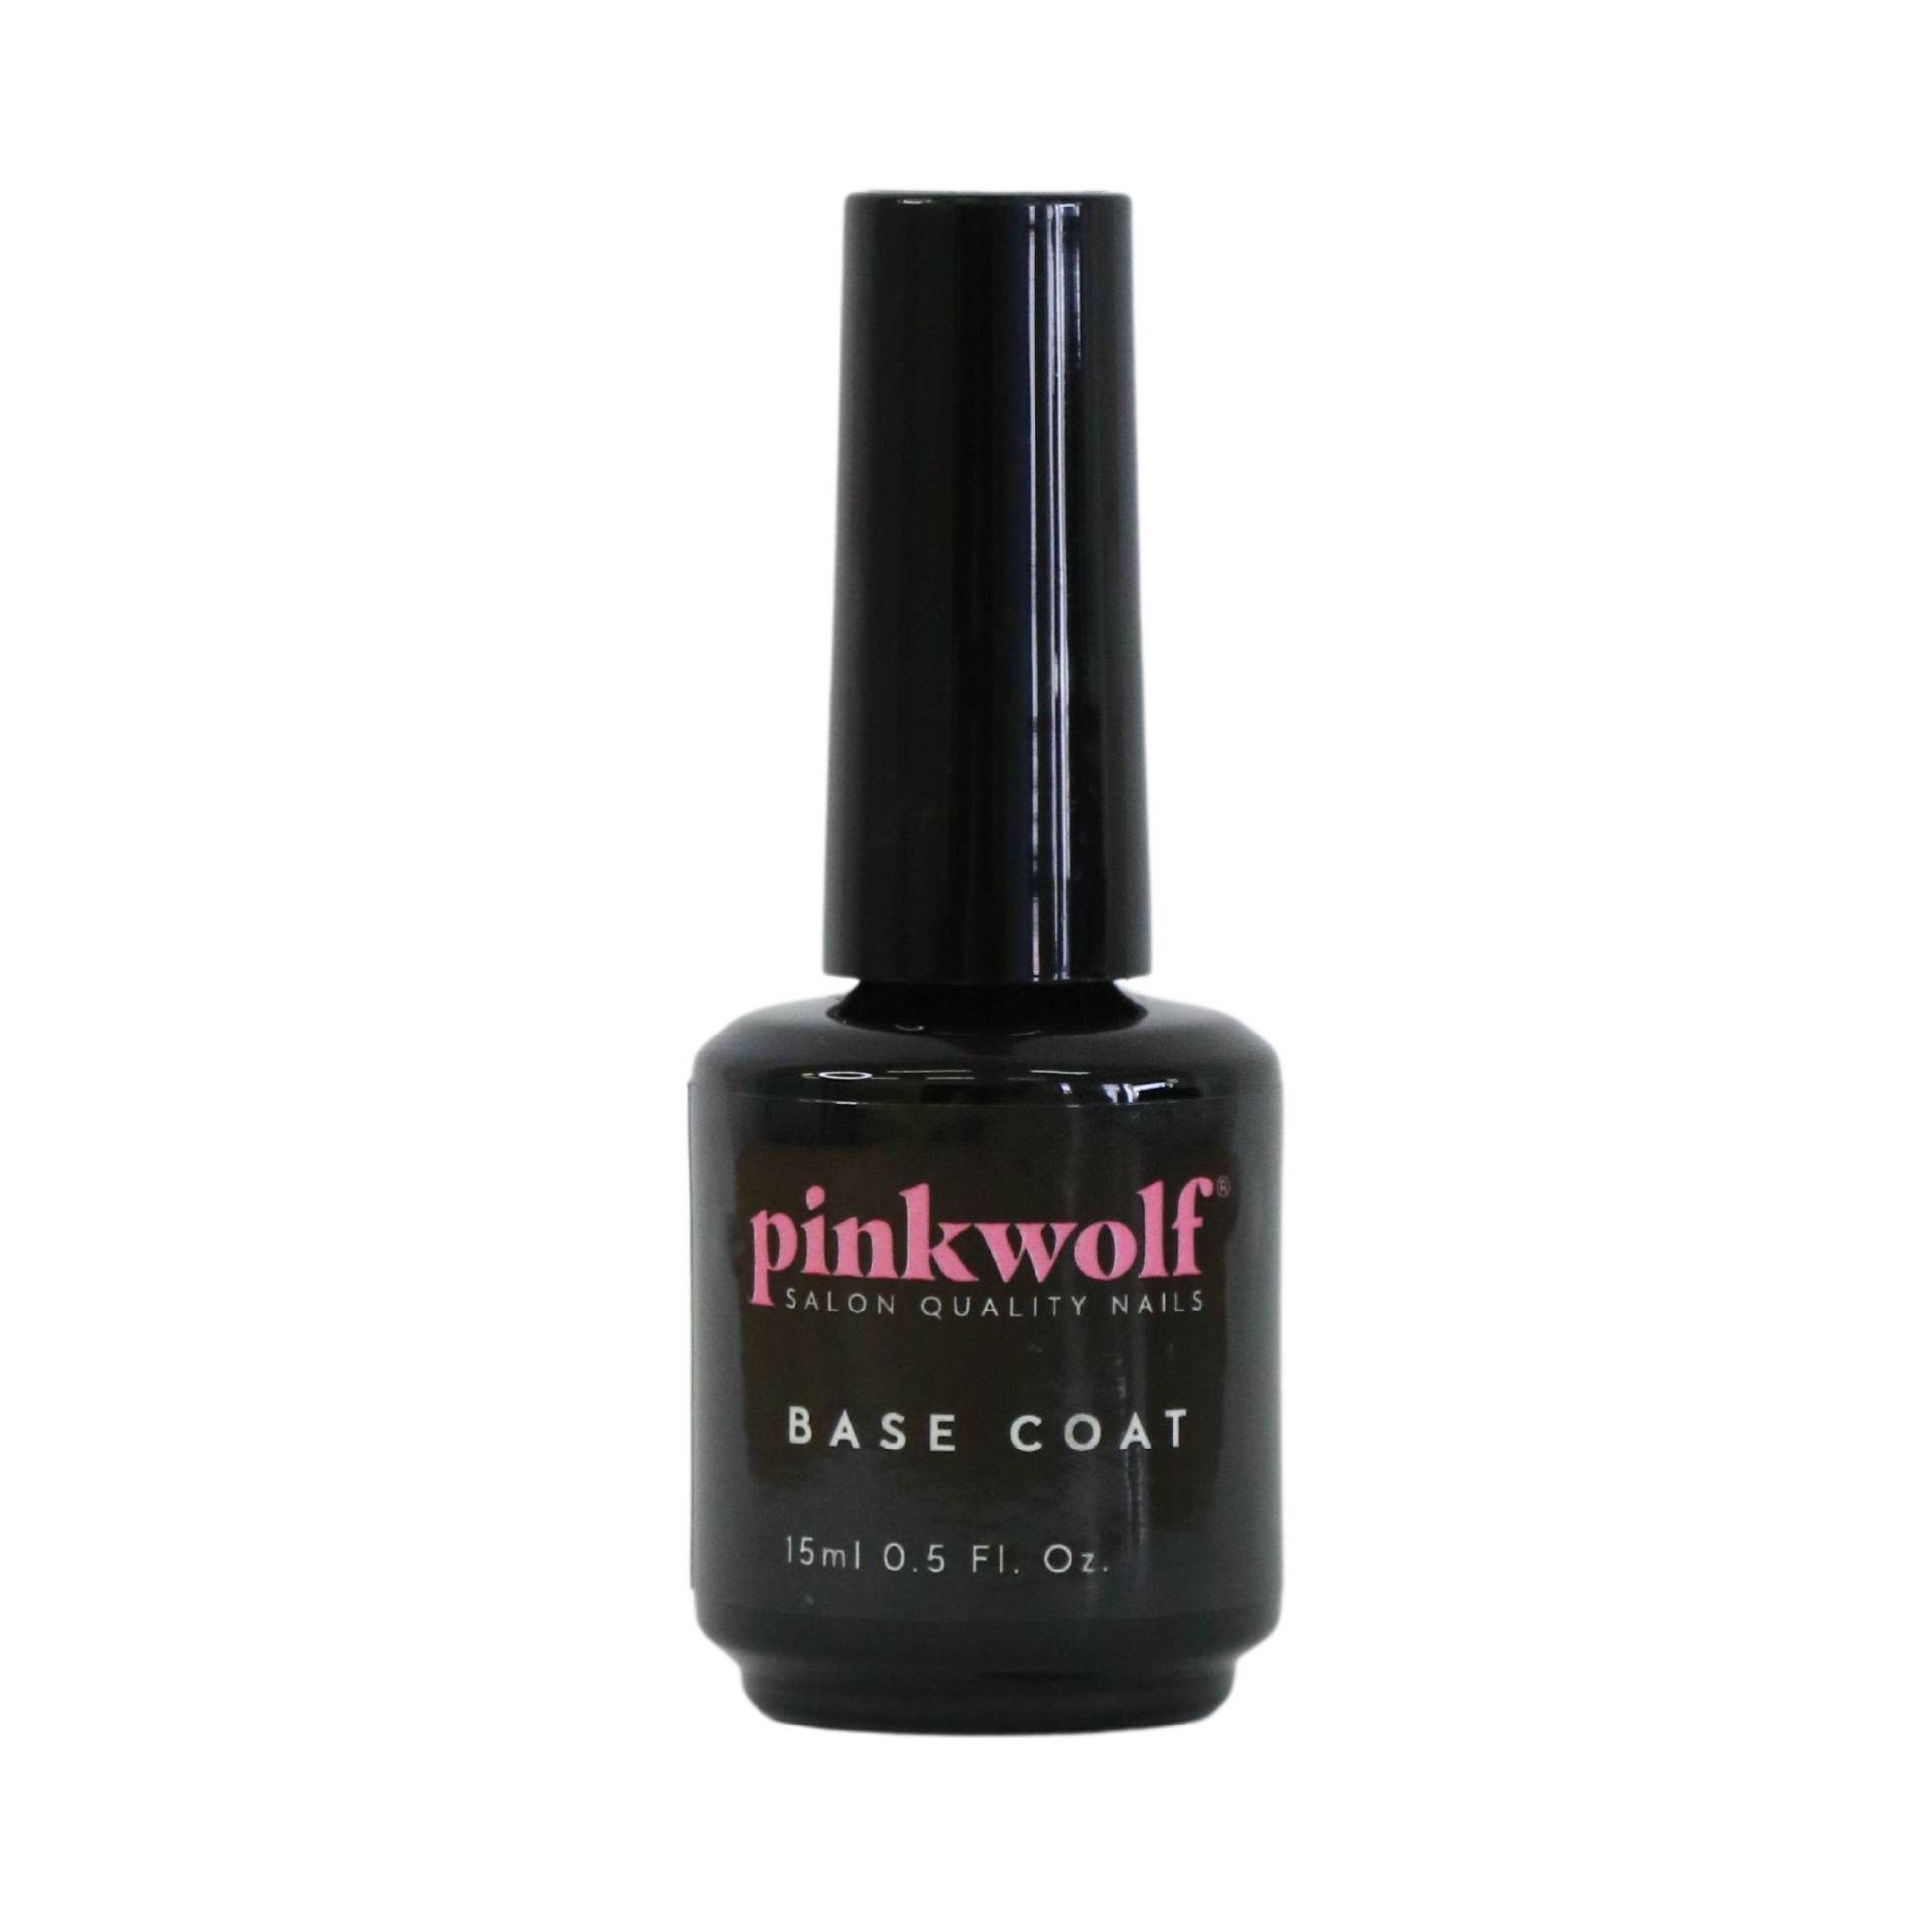 Pinkwolf gel nail polish base coat 15ml bottle